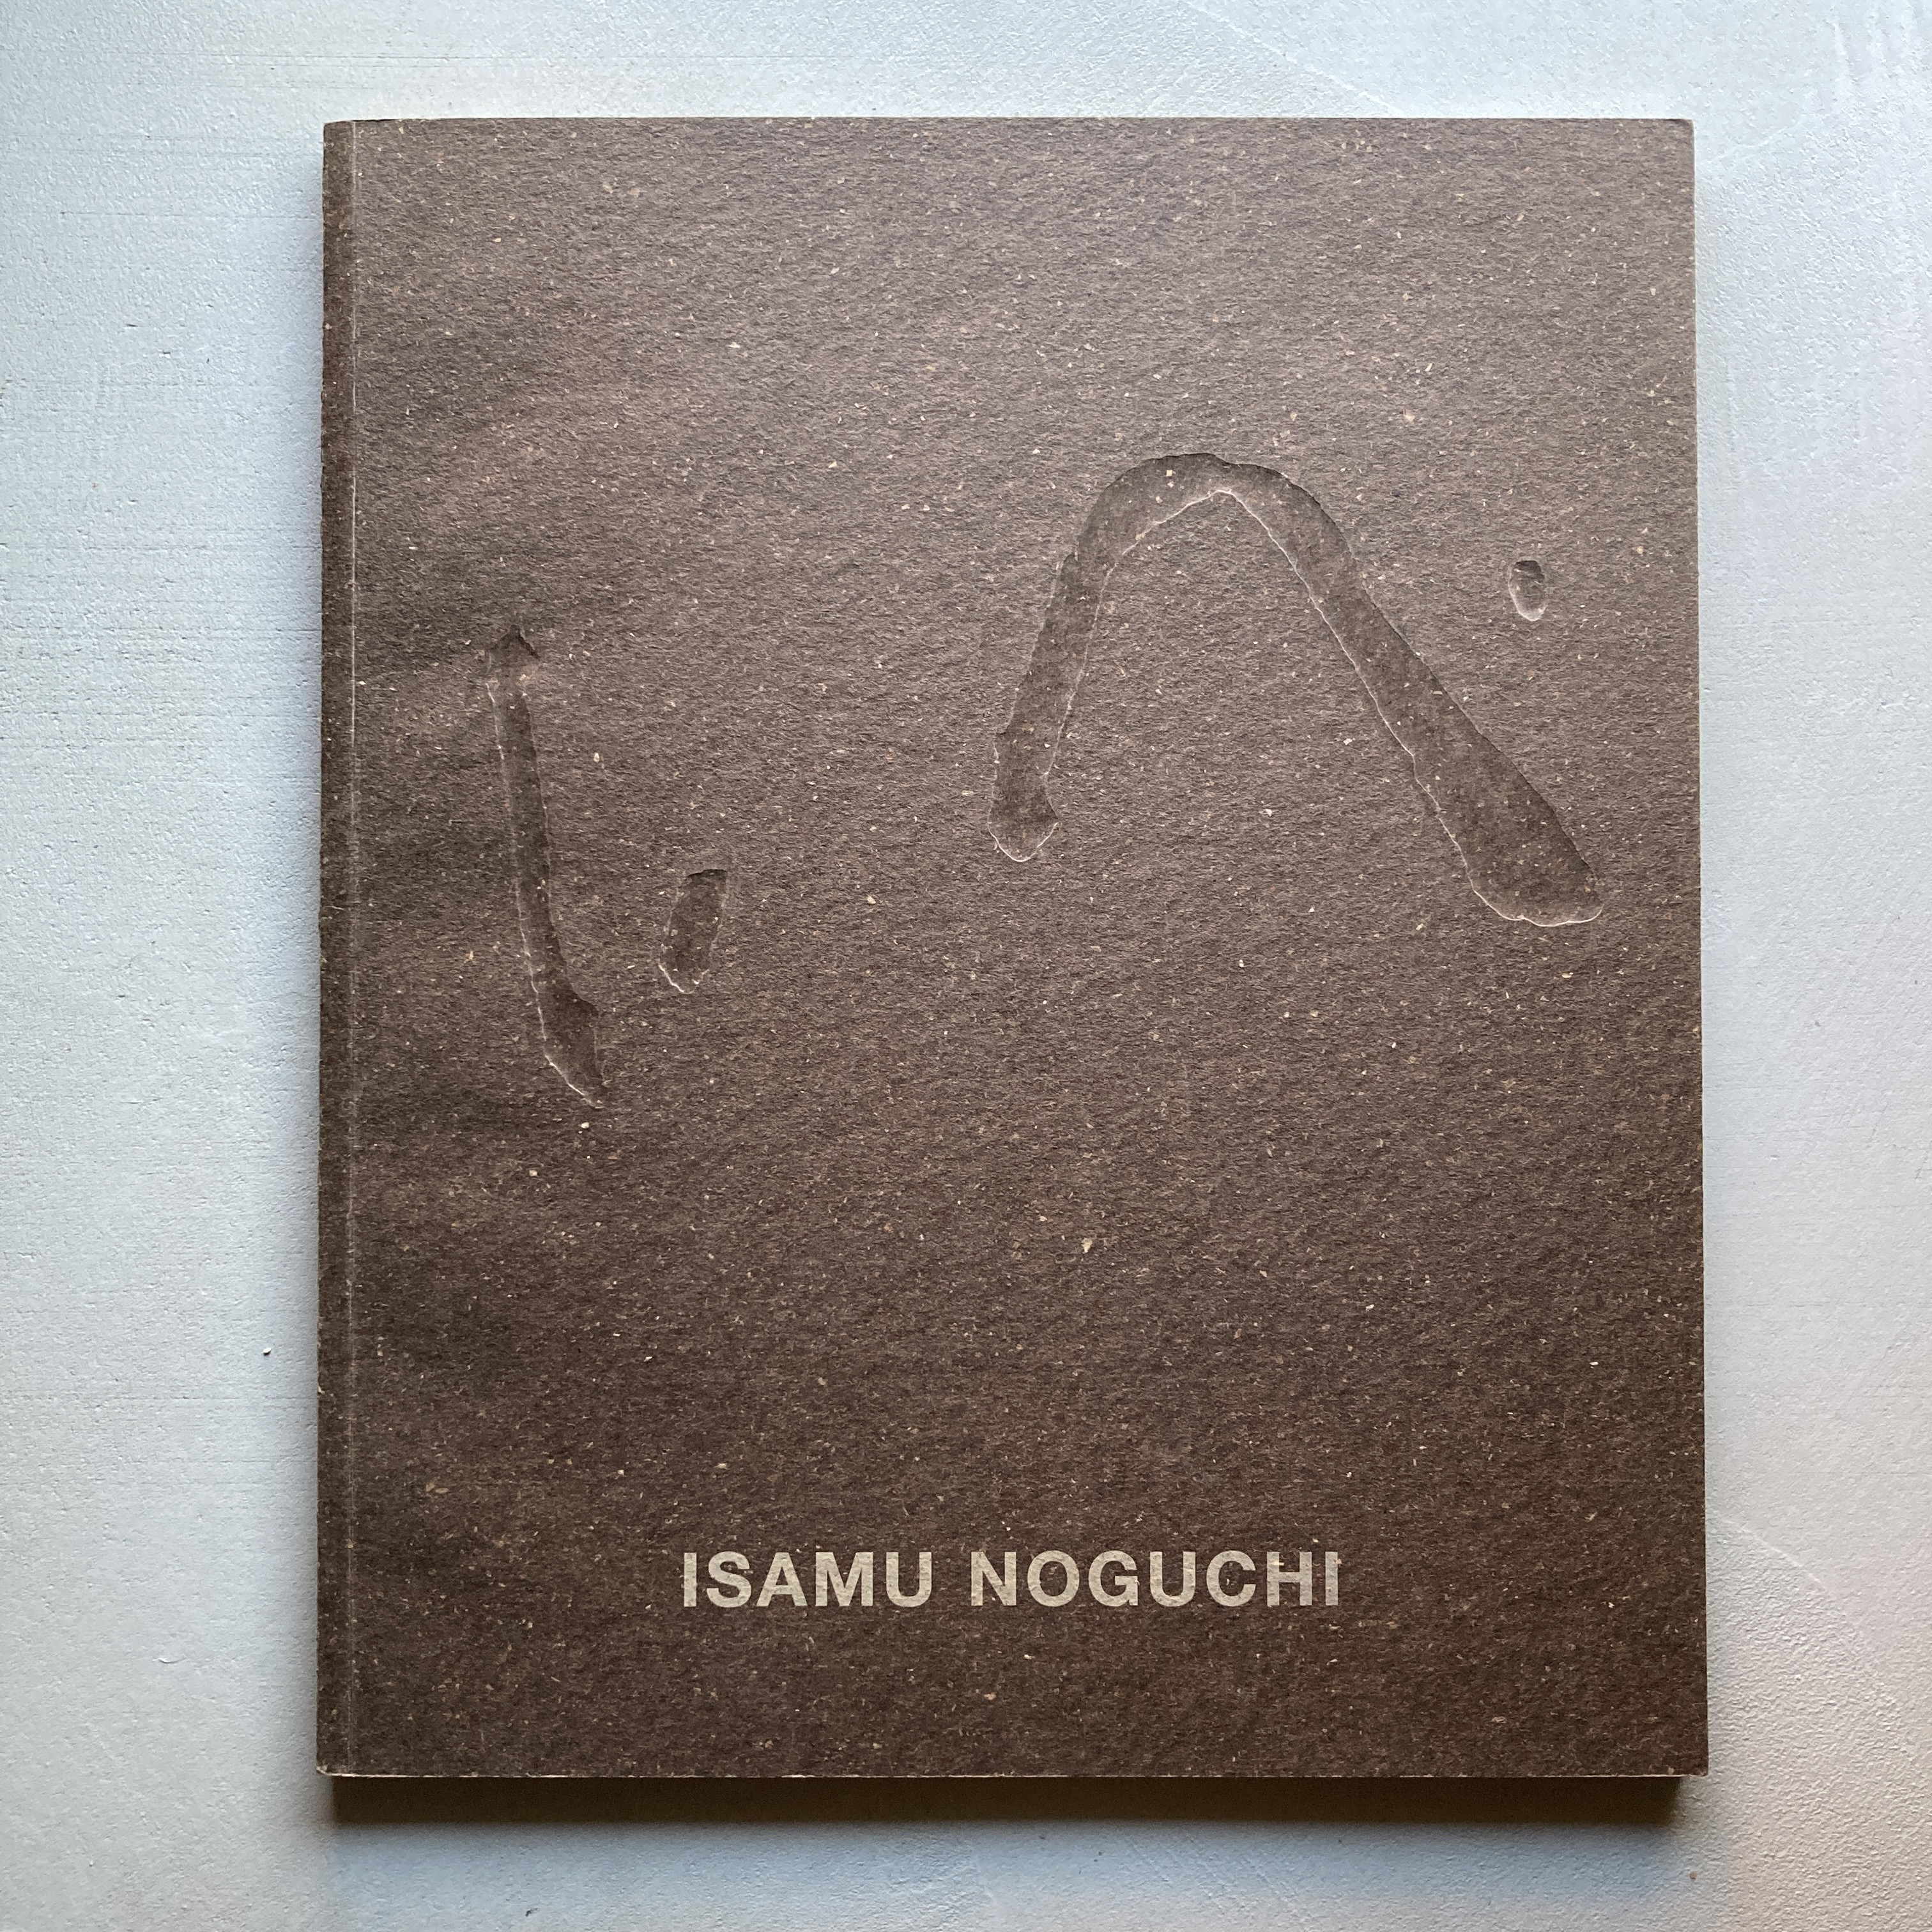 Isamu Noguchi / イサム・ノグチ展覧会カタログ | CIRCLE THE GALLERY